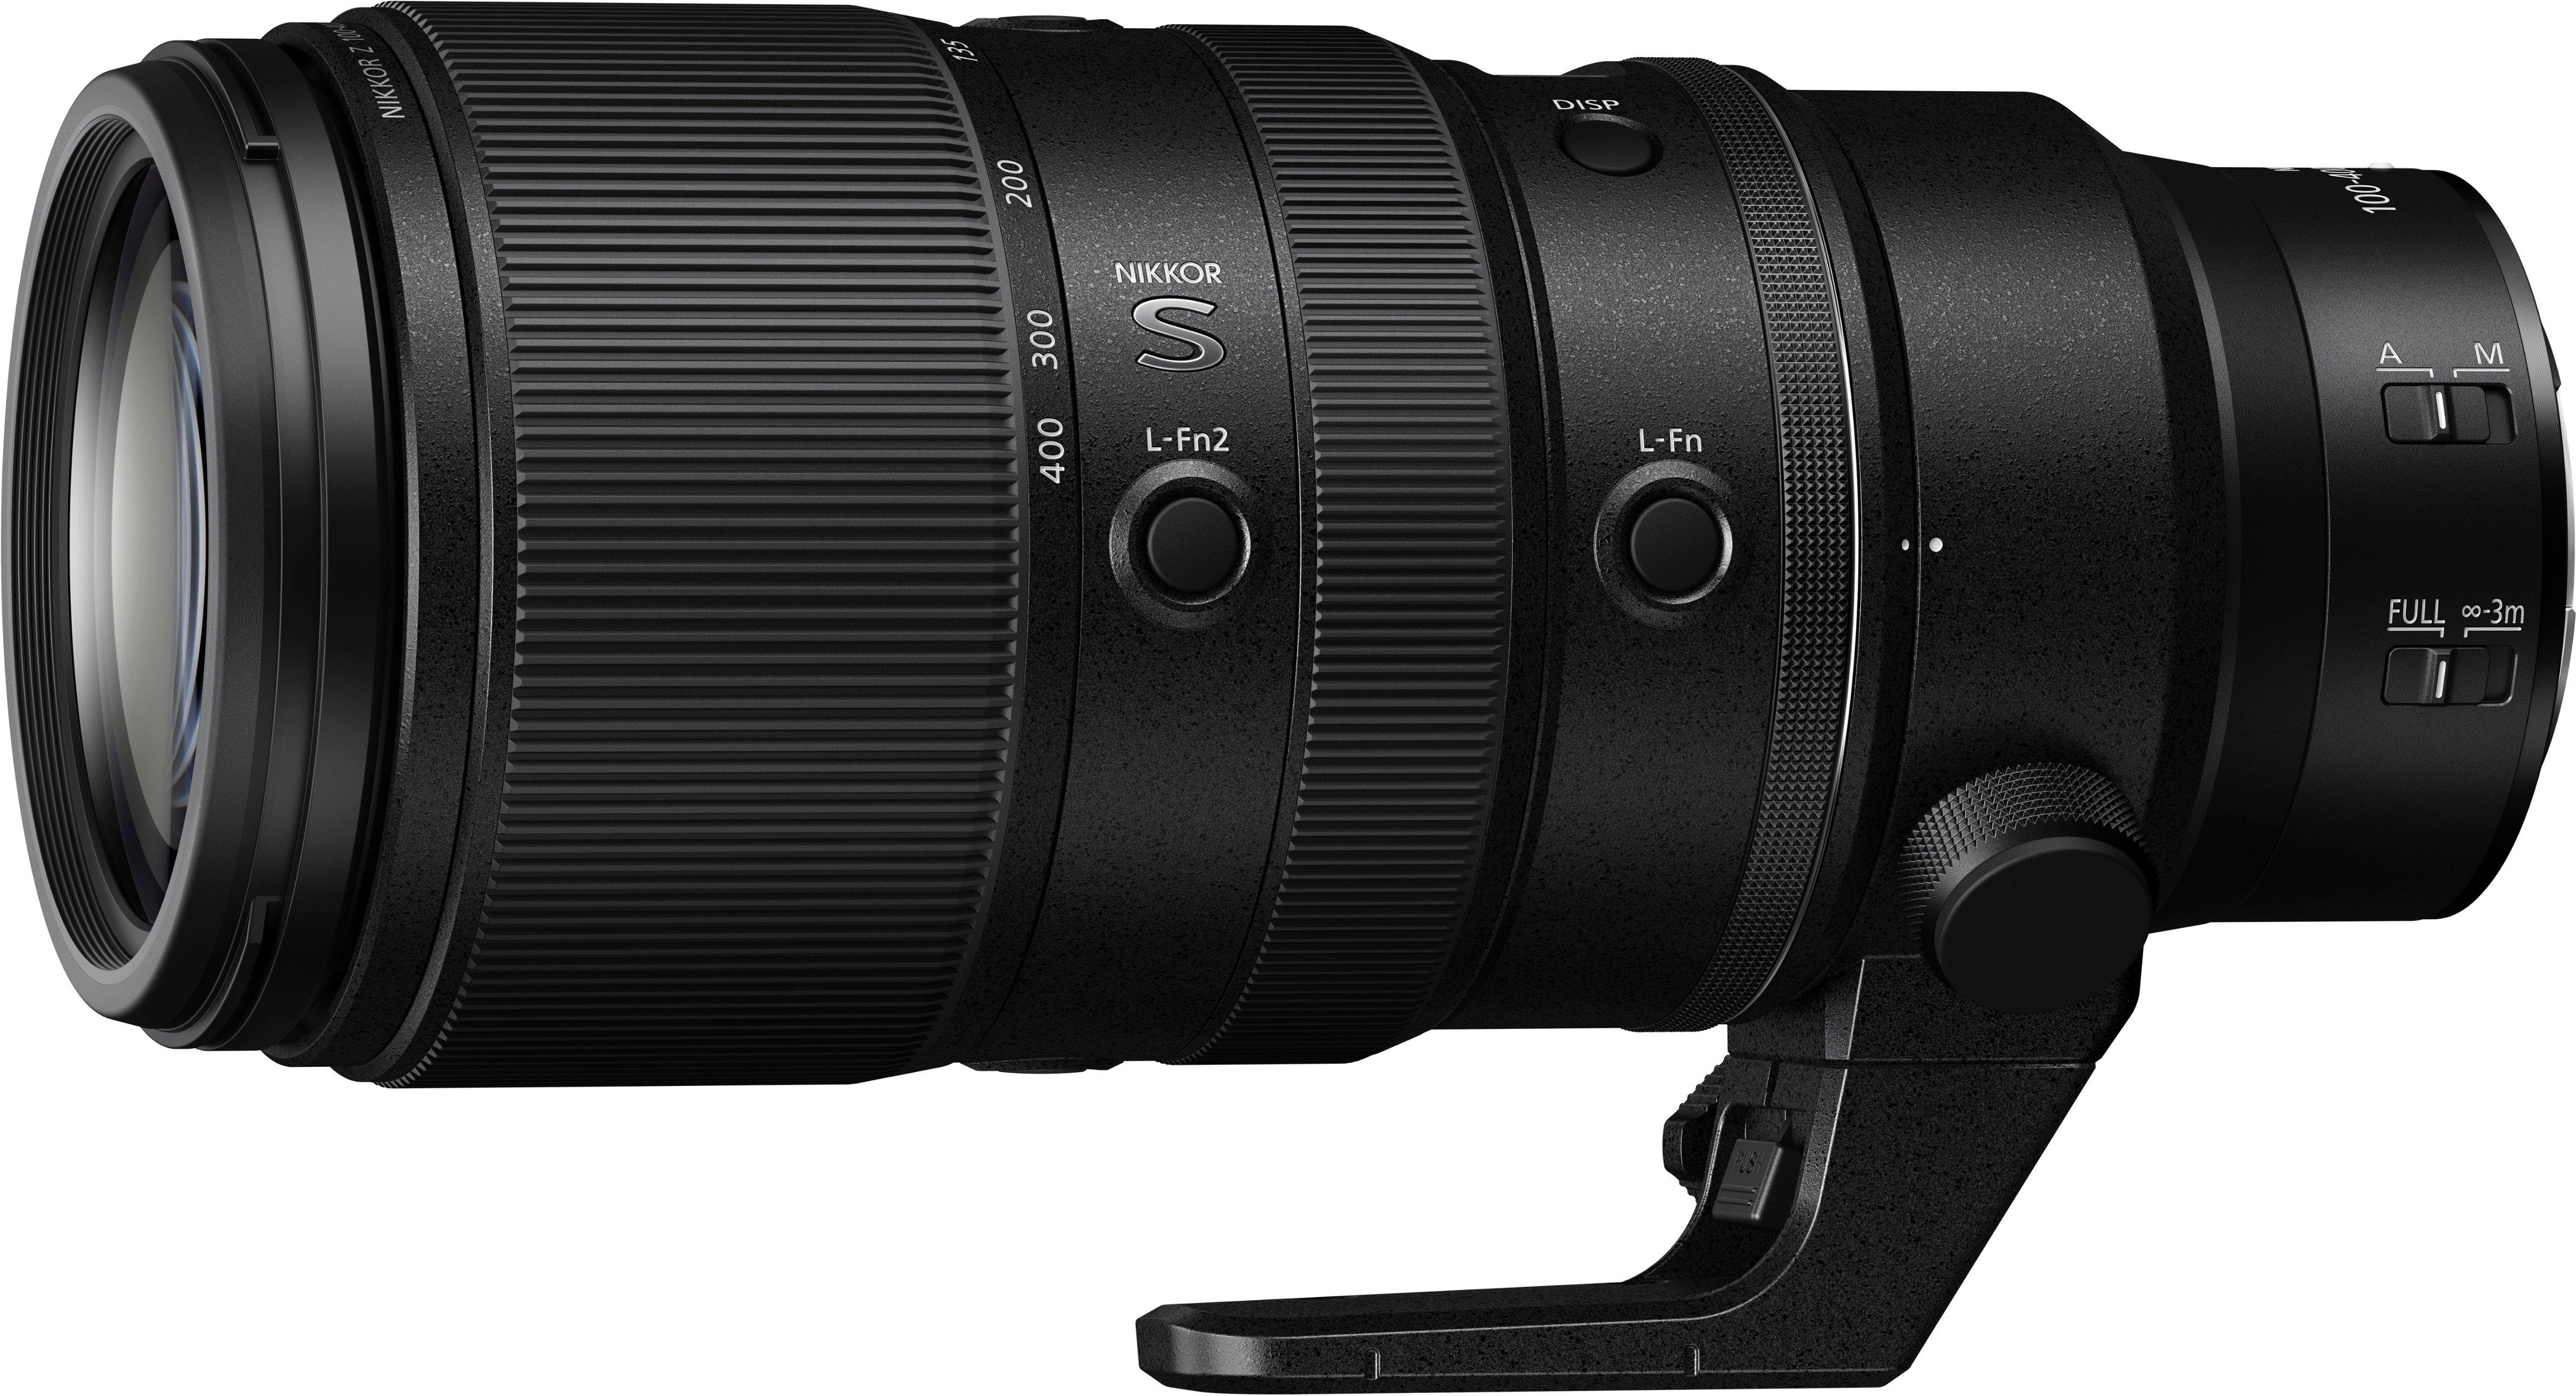 Back View: FE 14mm F1.8 GM Full-frame Large-aperture Wide Angle Prime G Master Lens for Sony Alpha E-mount Cameras - Black